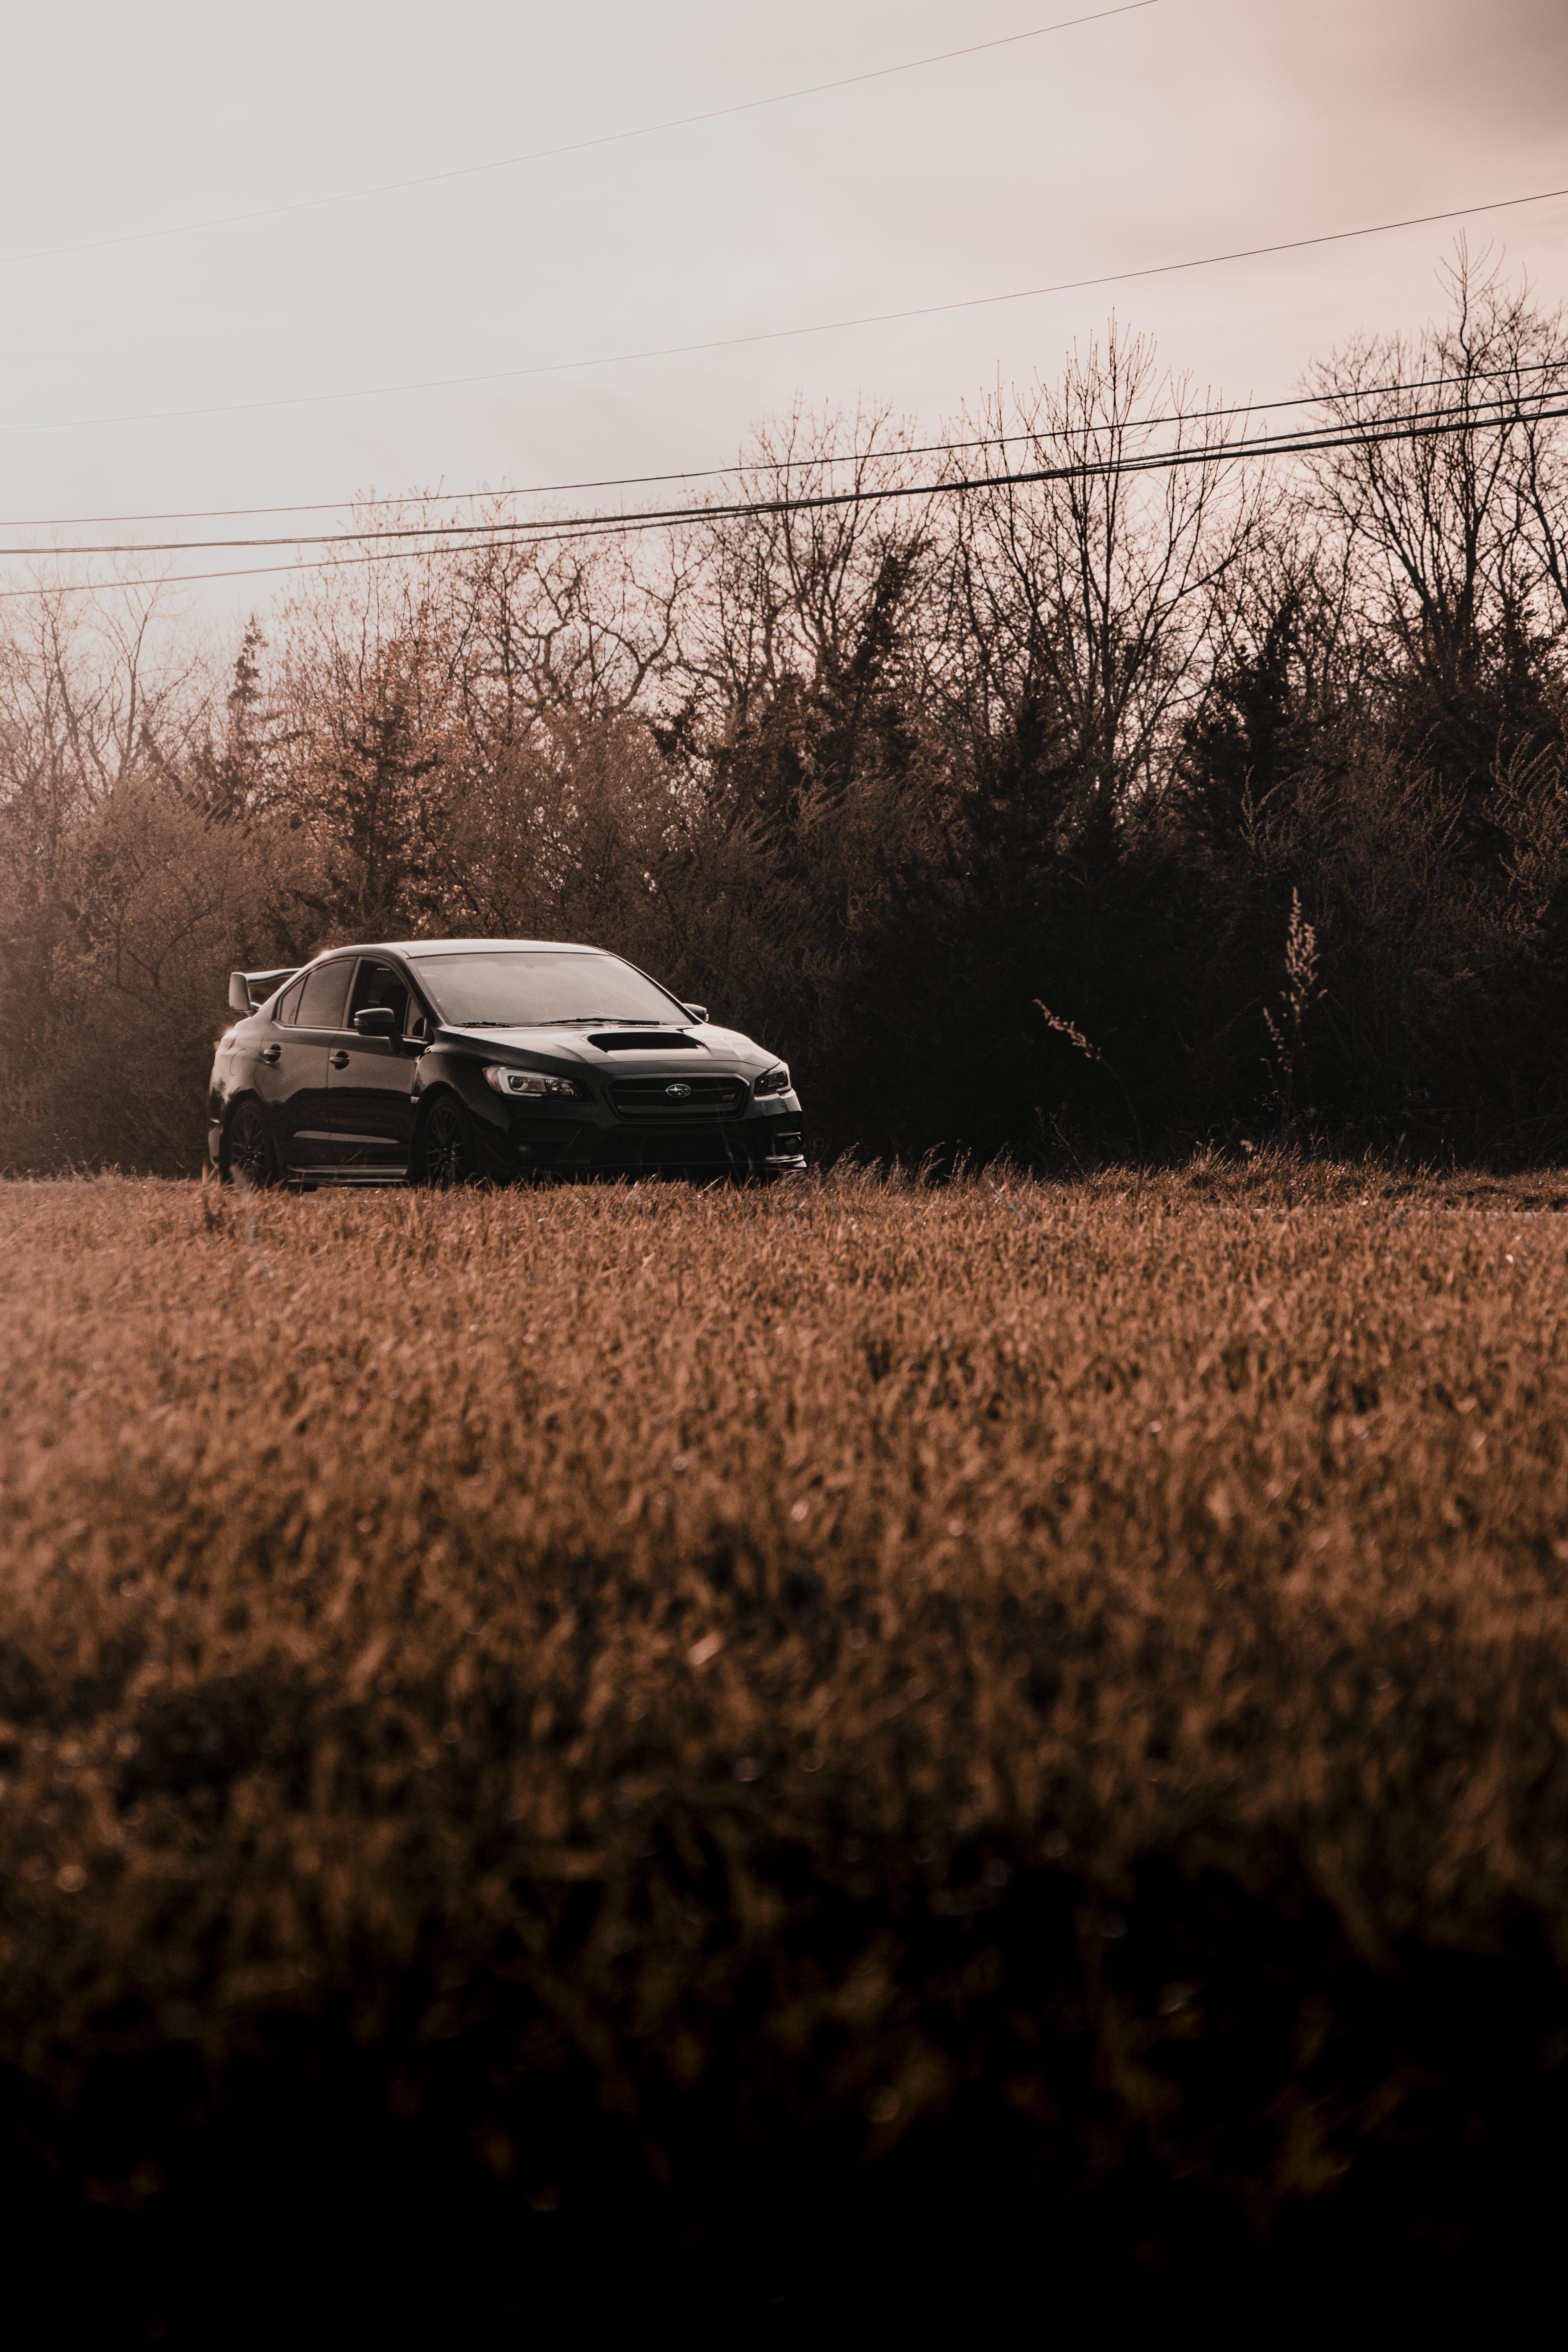 Subaru WRX STI Photo After Editing